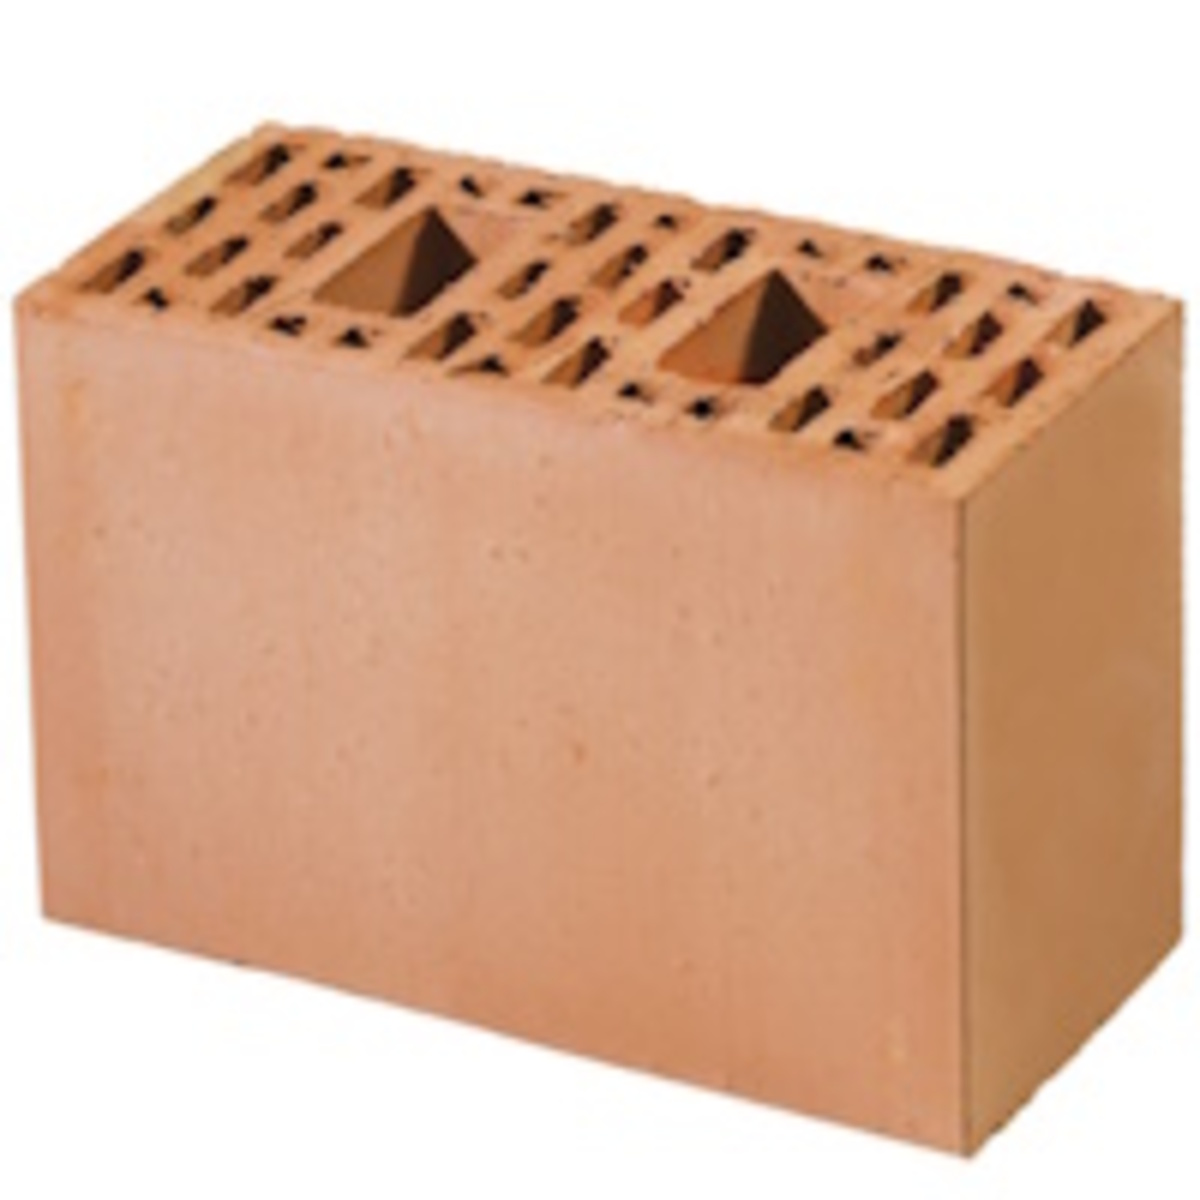 Porous brick